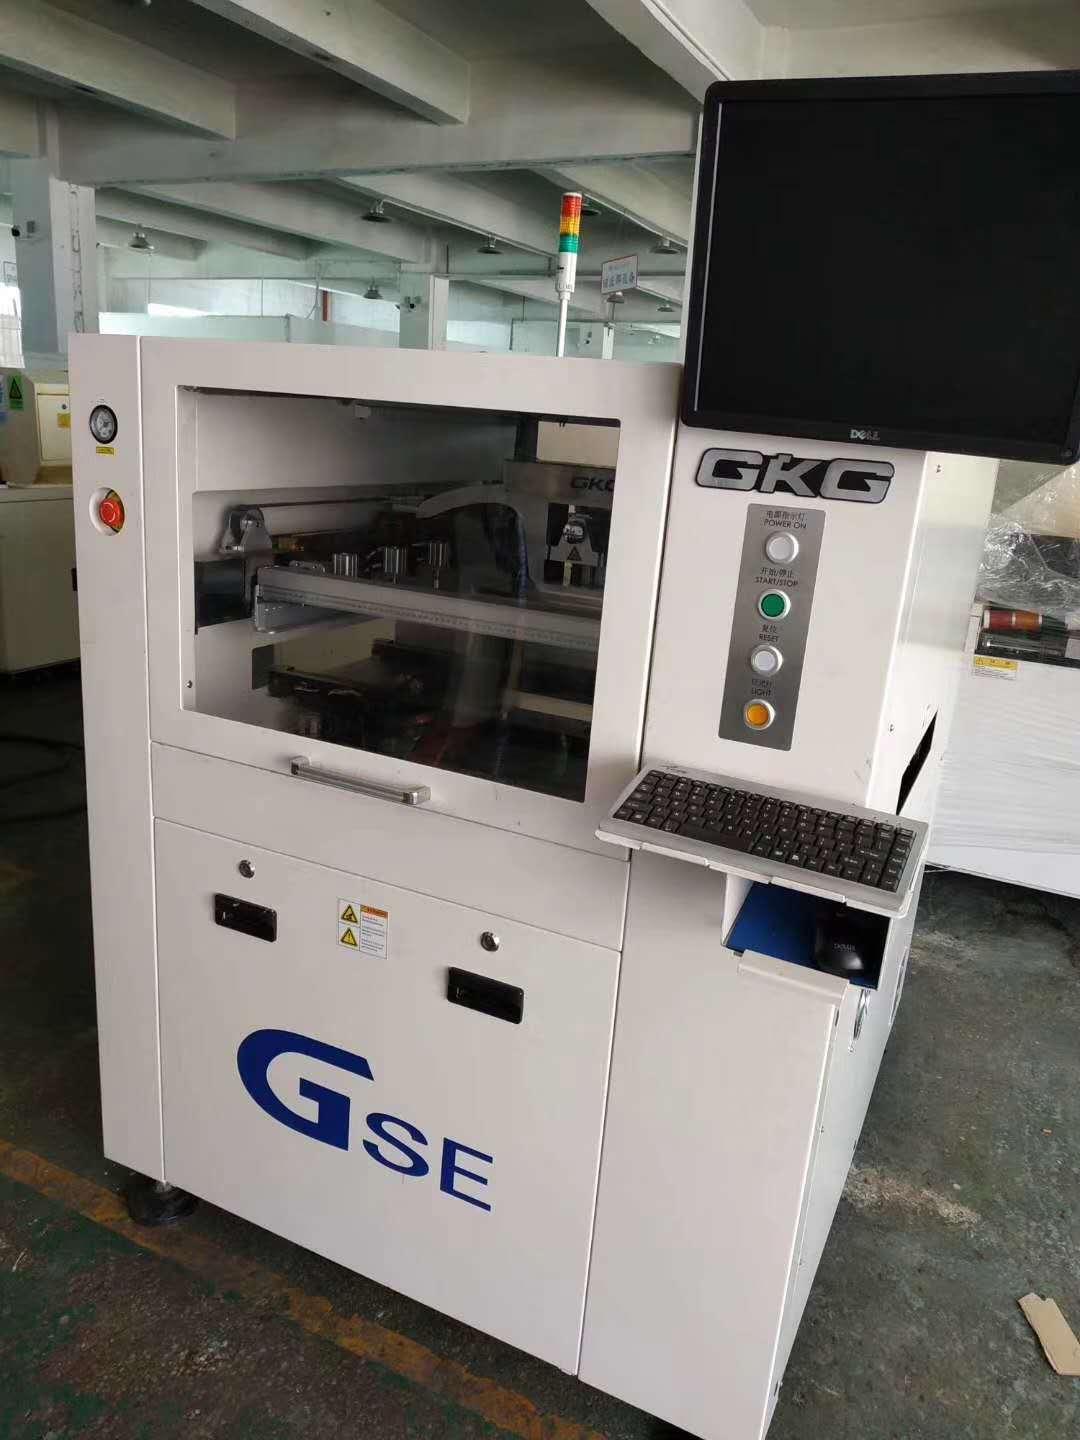 GKG-GSE全自动锡膏印刷机租售